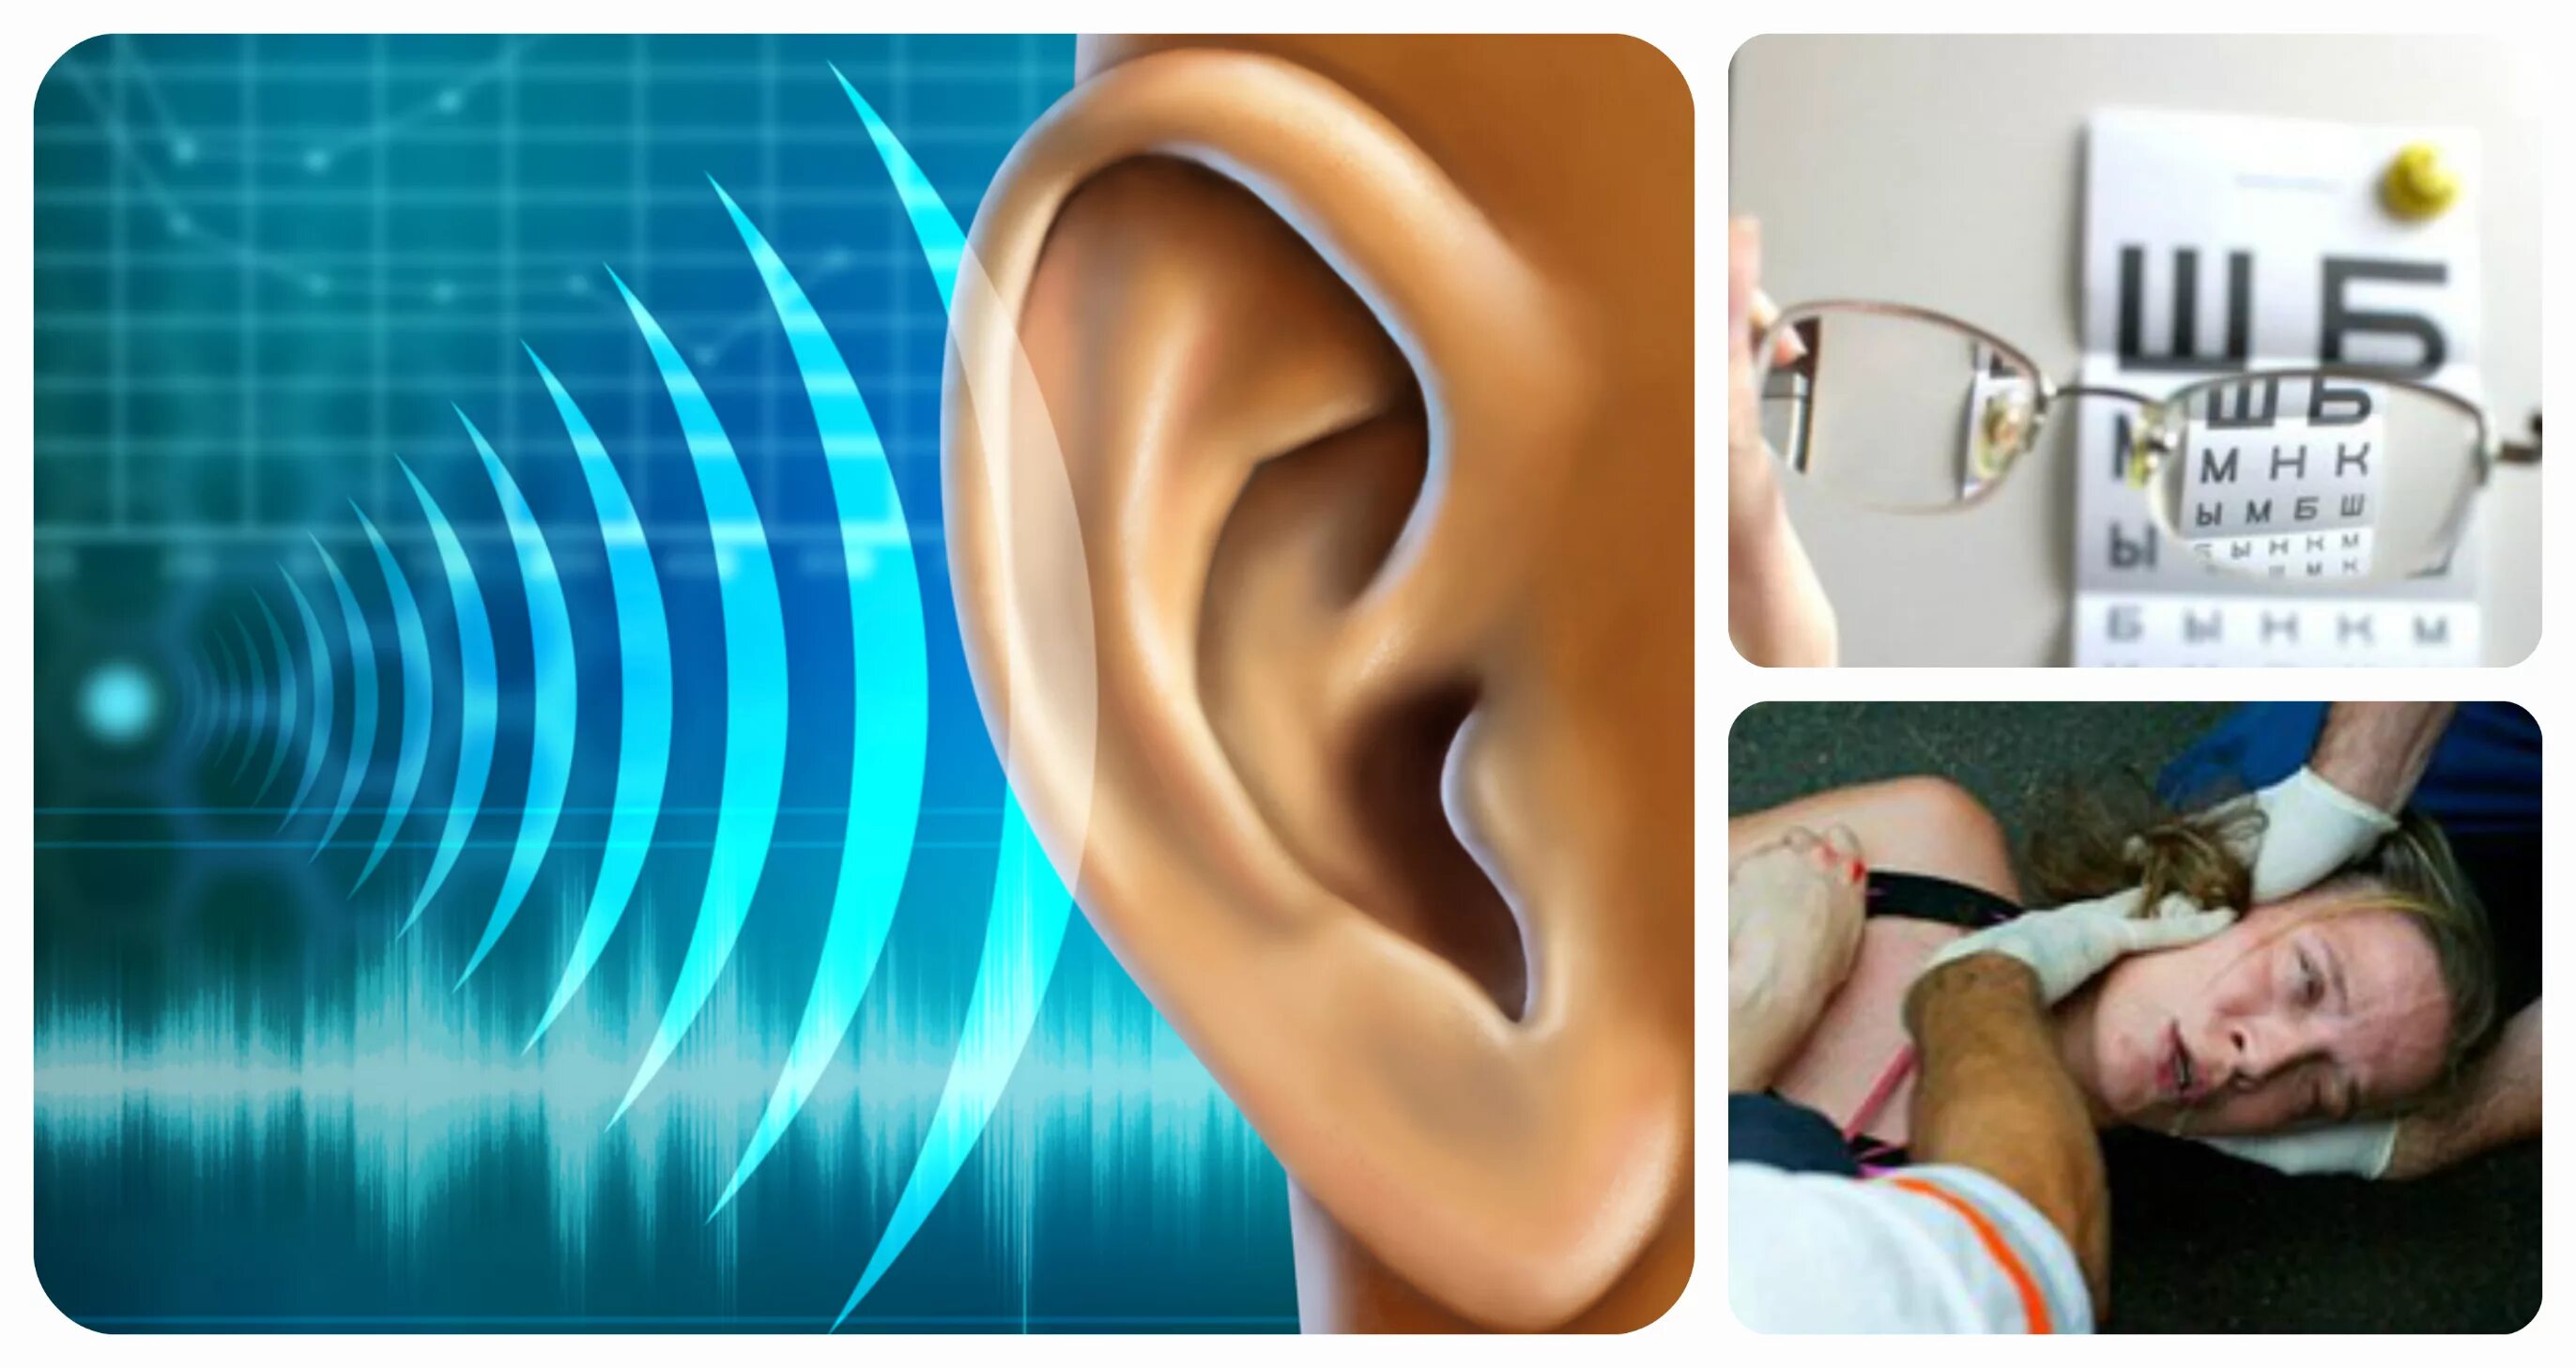 Глухота аномалия. Нарушение слуха и зрения. Зрение и слух. Компенсация зрения слухом. Проблемы со слухом и зрением.